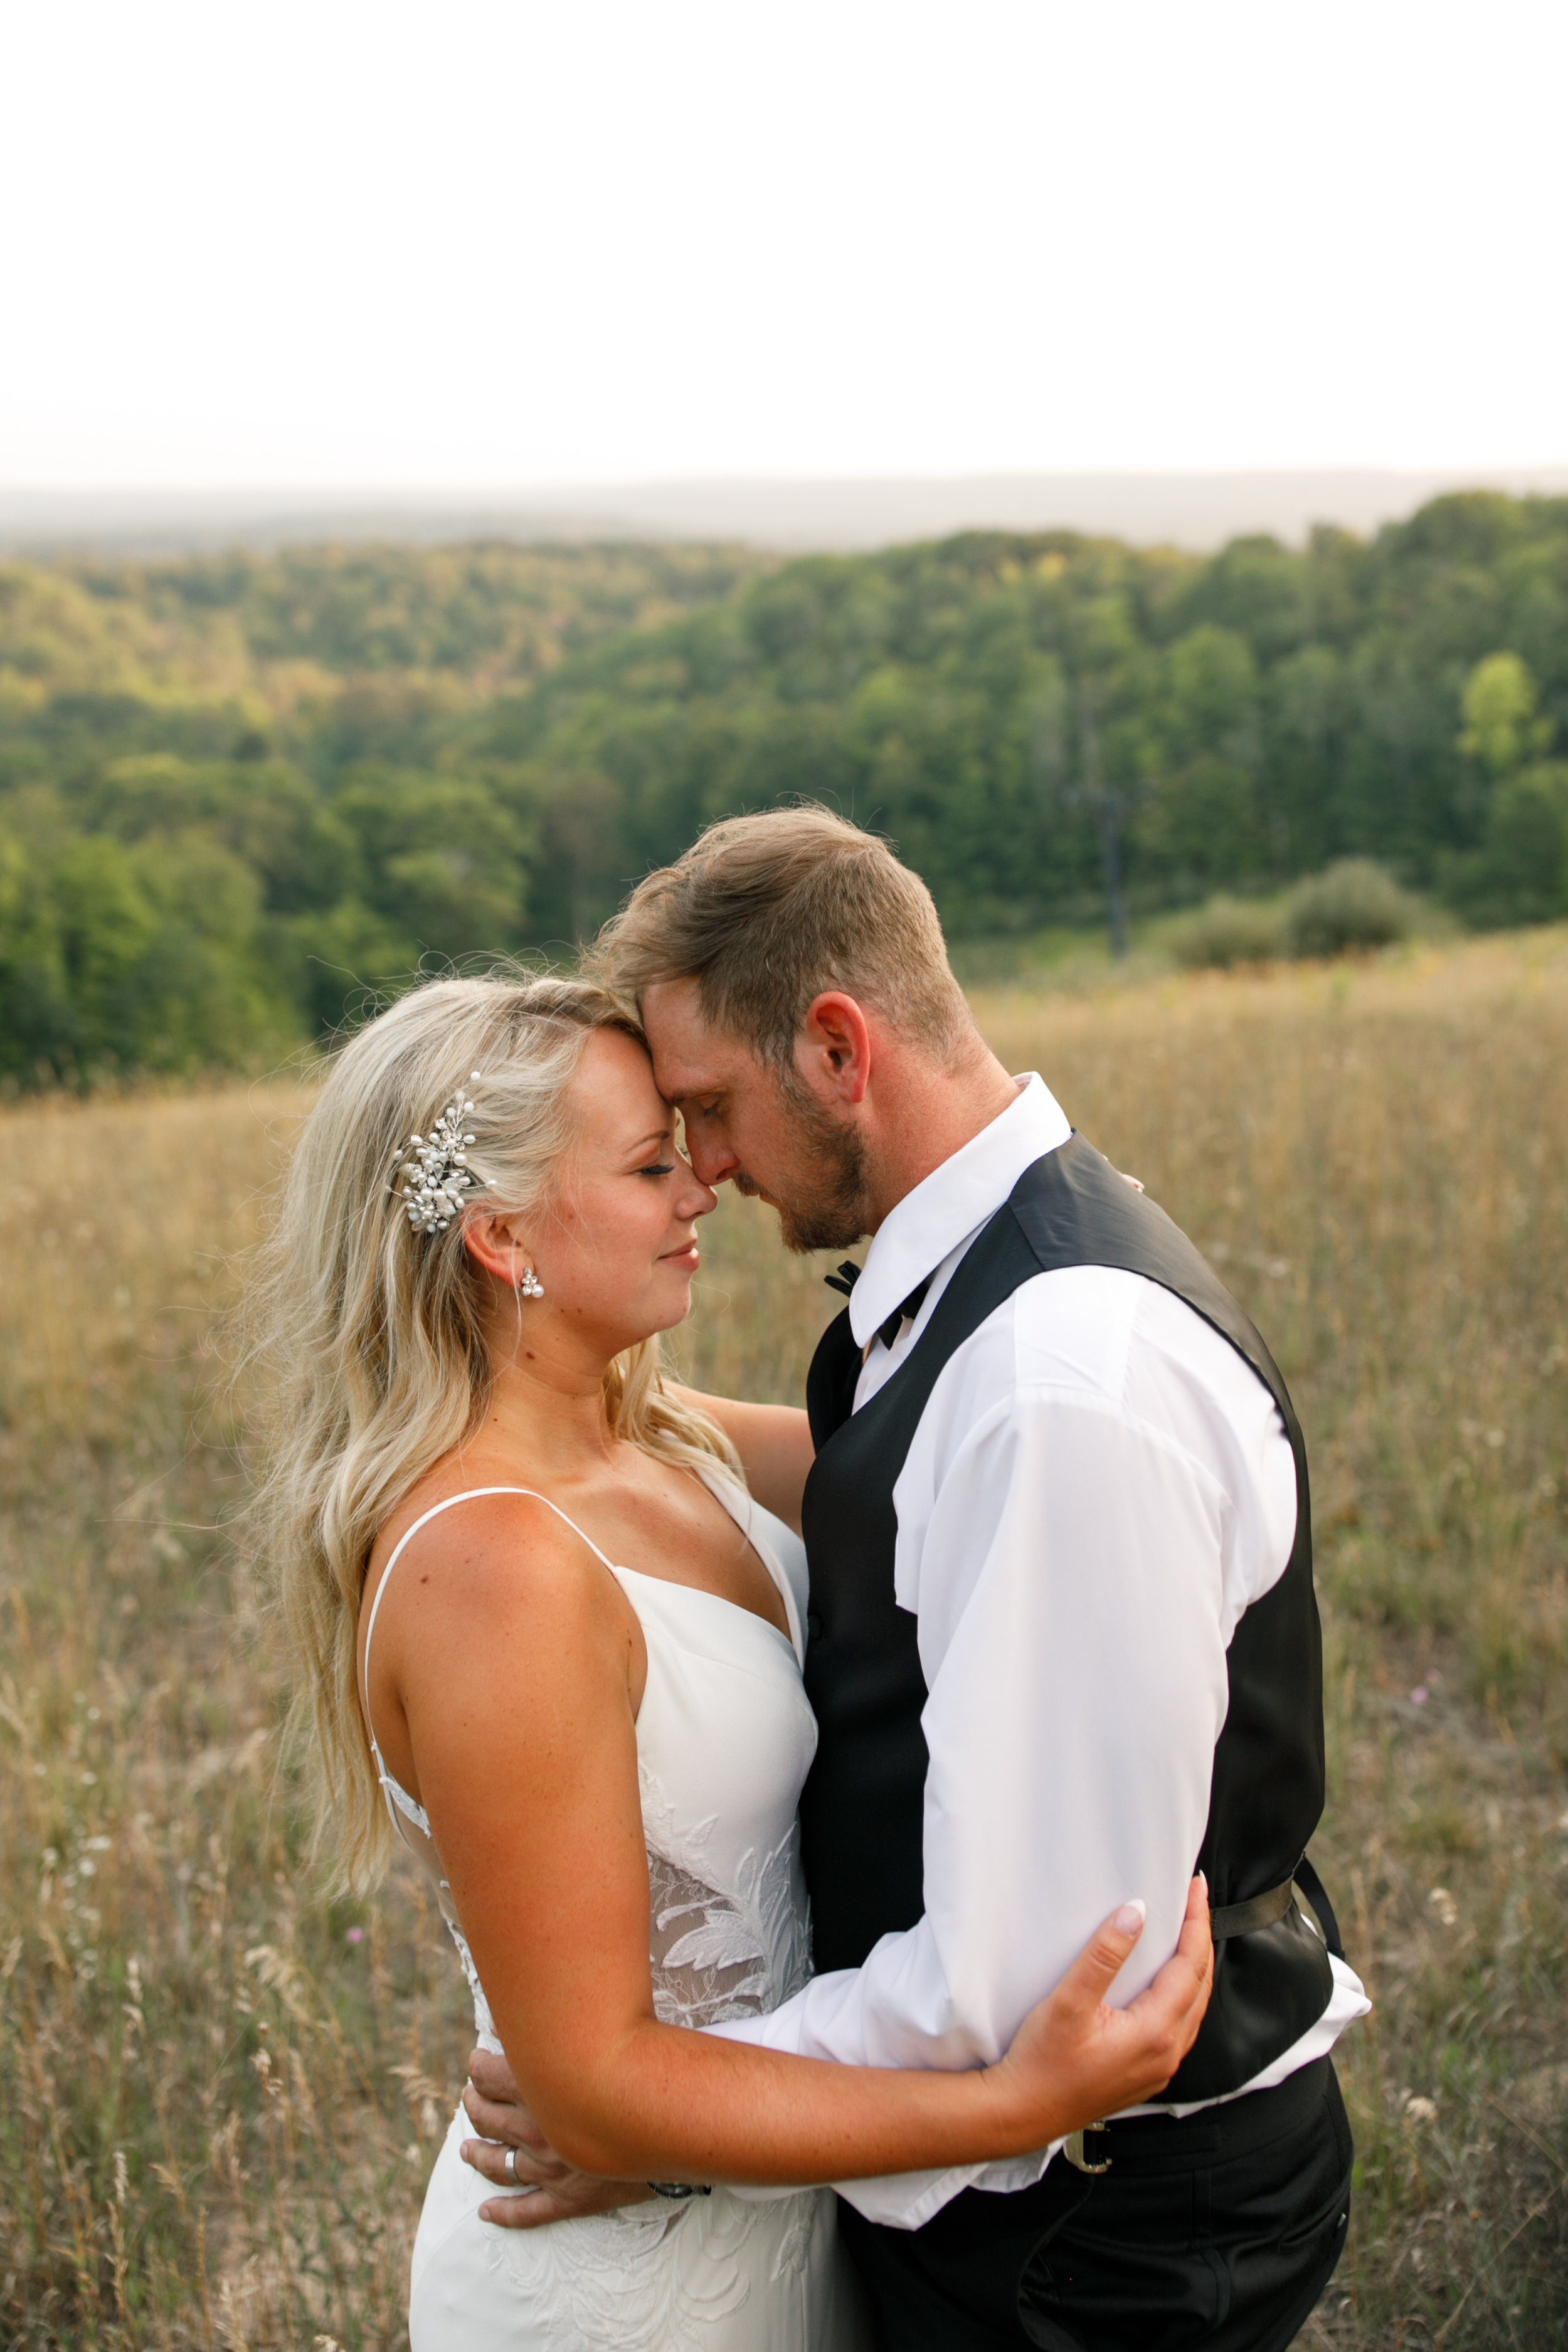 Josh and Erica Wedding Preview - Shanty Creek Wedding - Northern Michigan Wedding Photographer - J Darling Photo_166.jpg